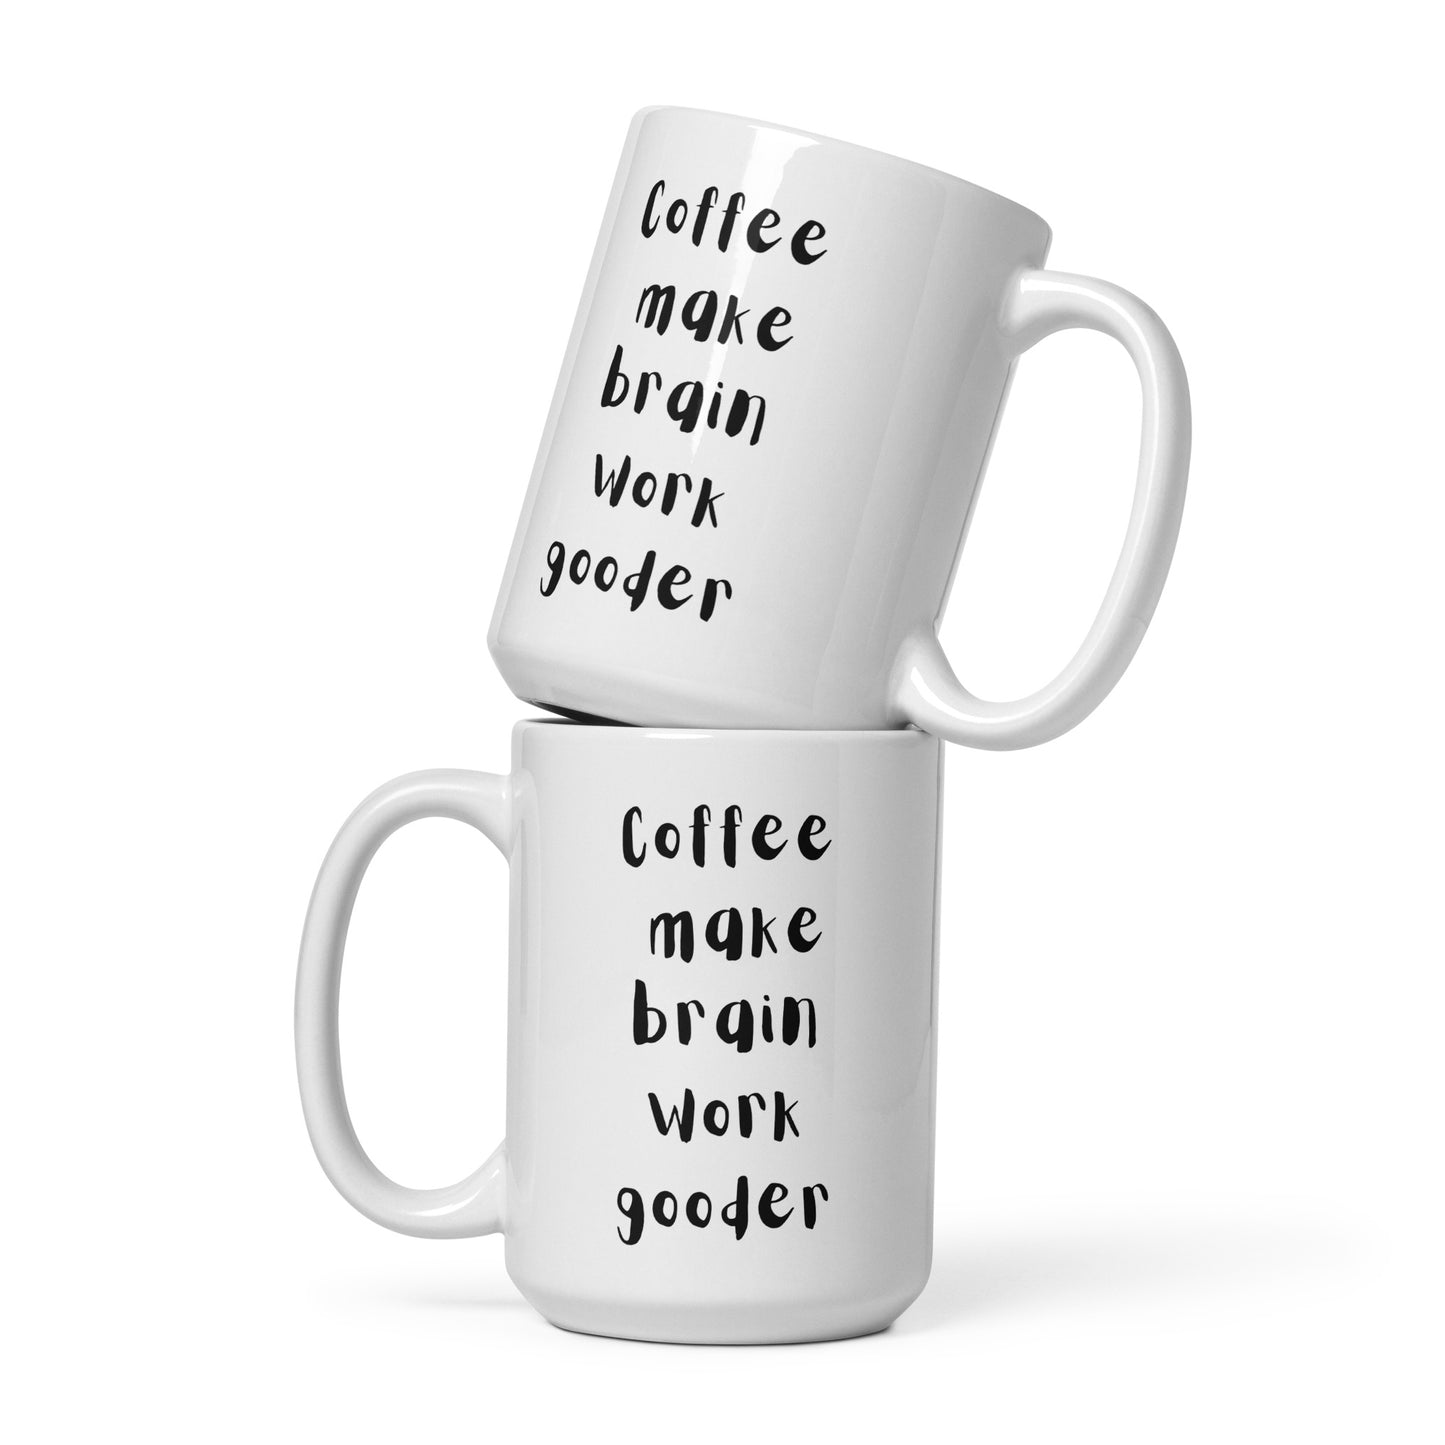 COFFEE MAKES GOODER Mug